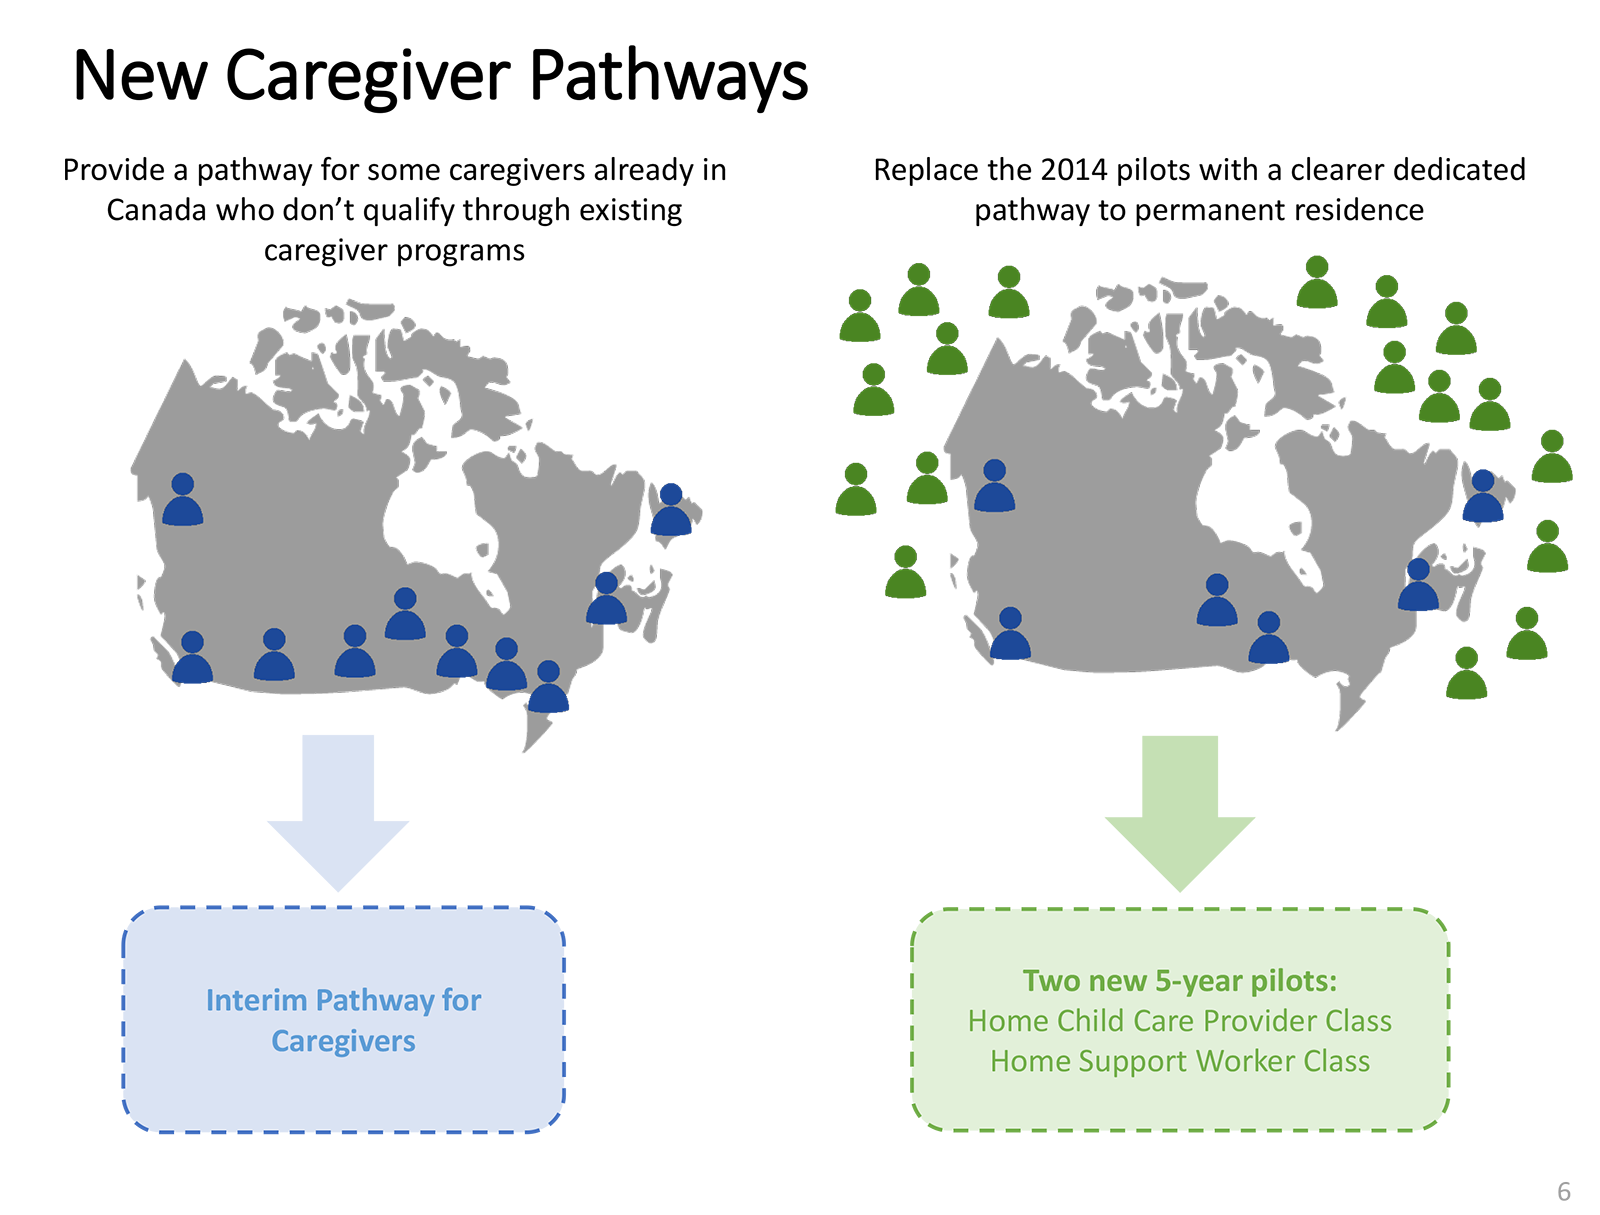 IRCC: New Caregiver Pathways